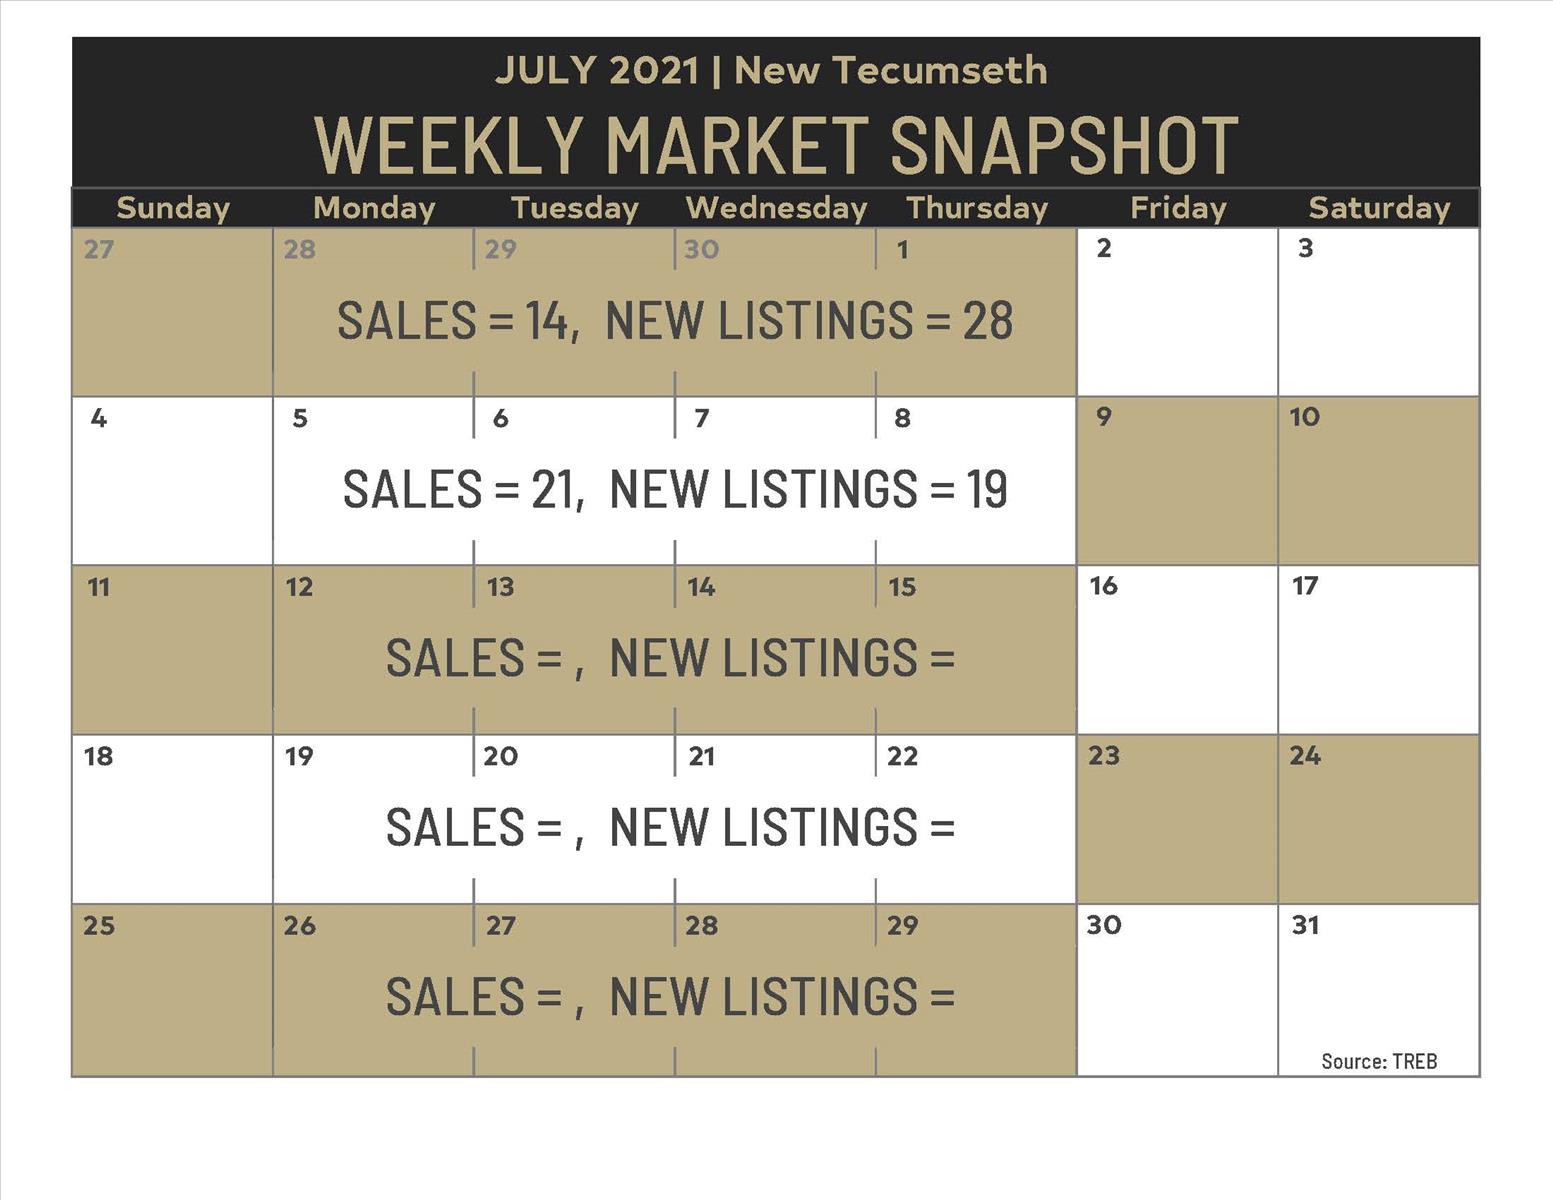 Weekly Market Snapshot: June 25 - July 8, 2021